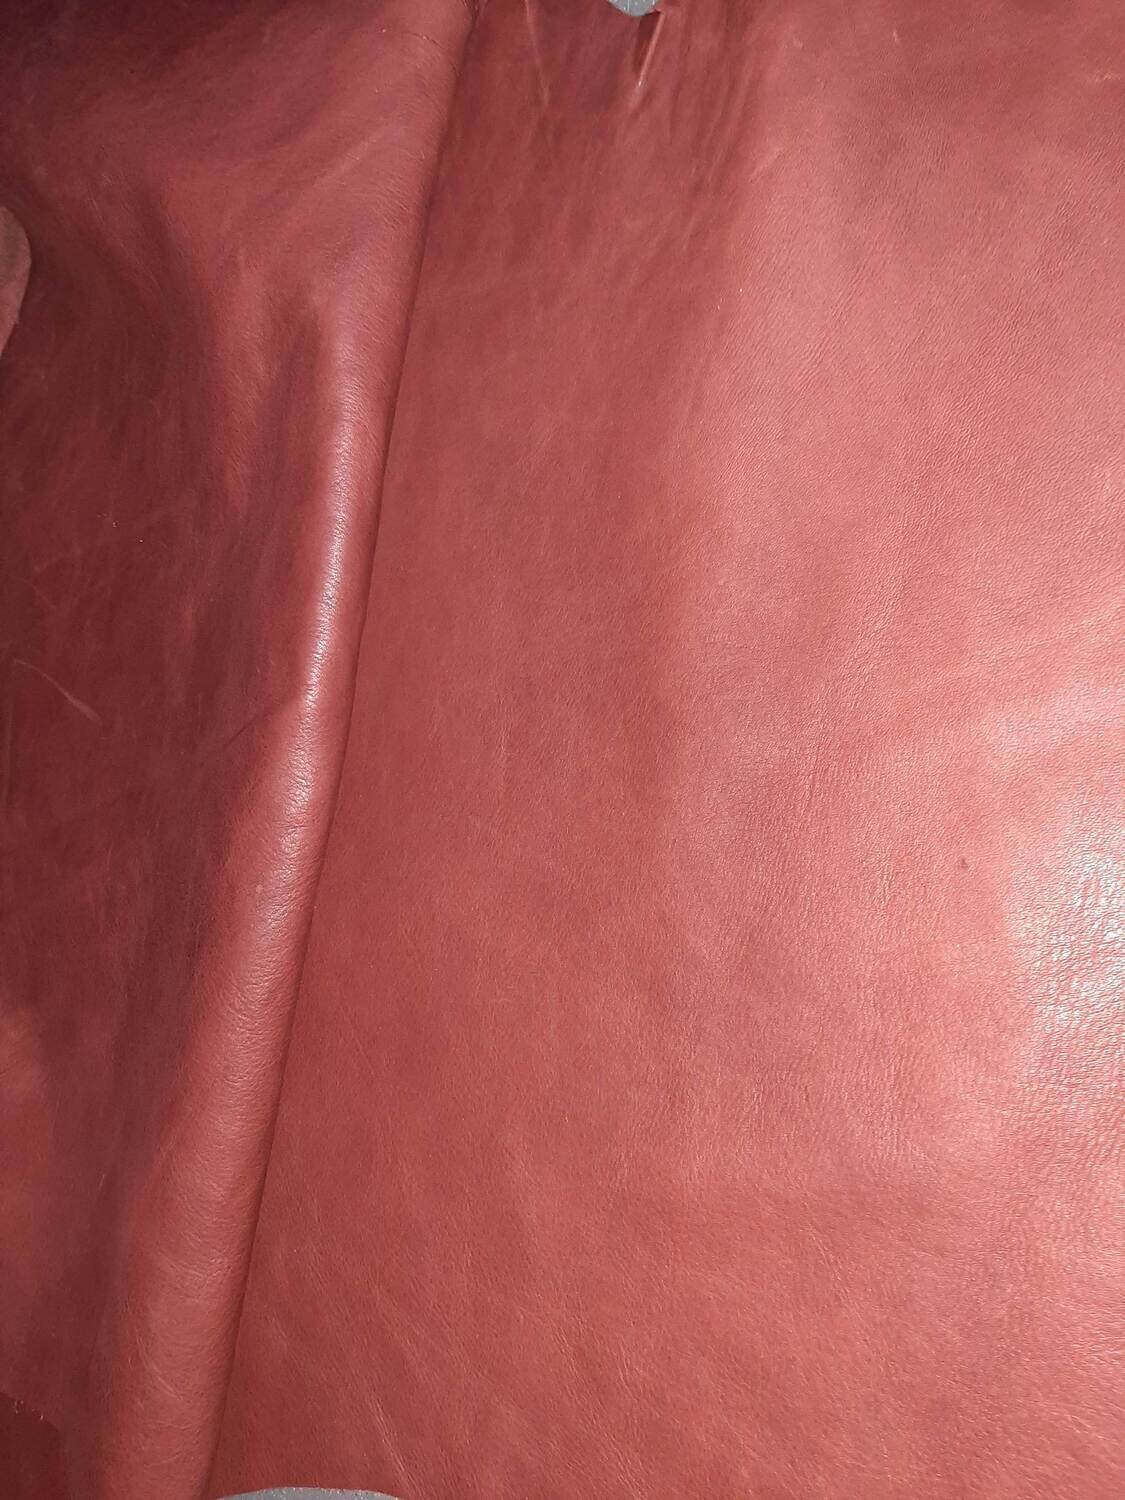 Large off cut - Leather bovine reddish brown color